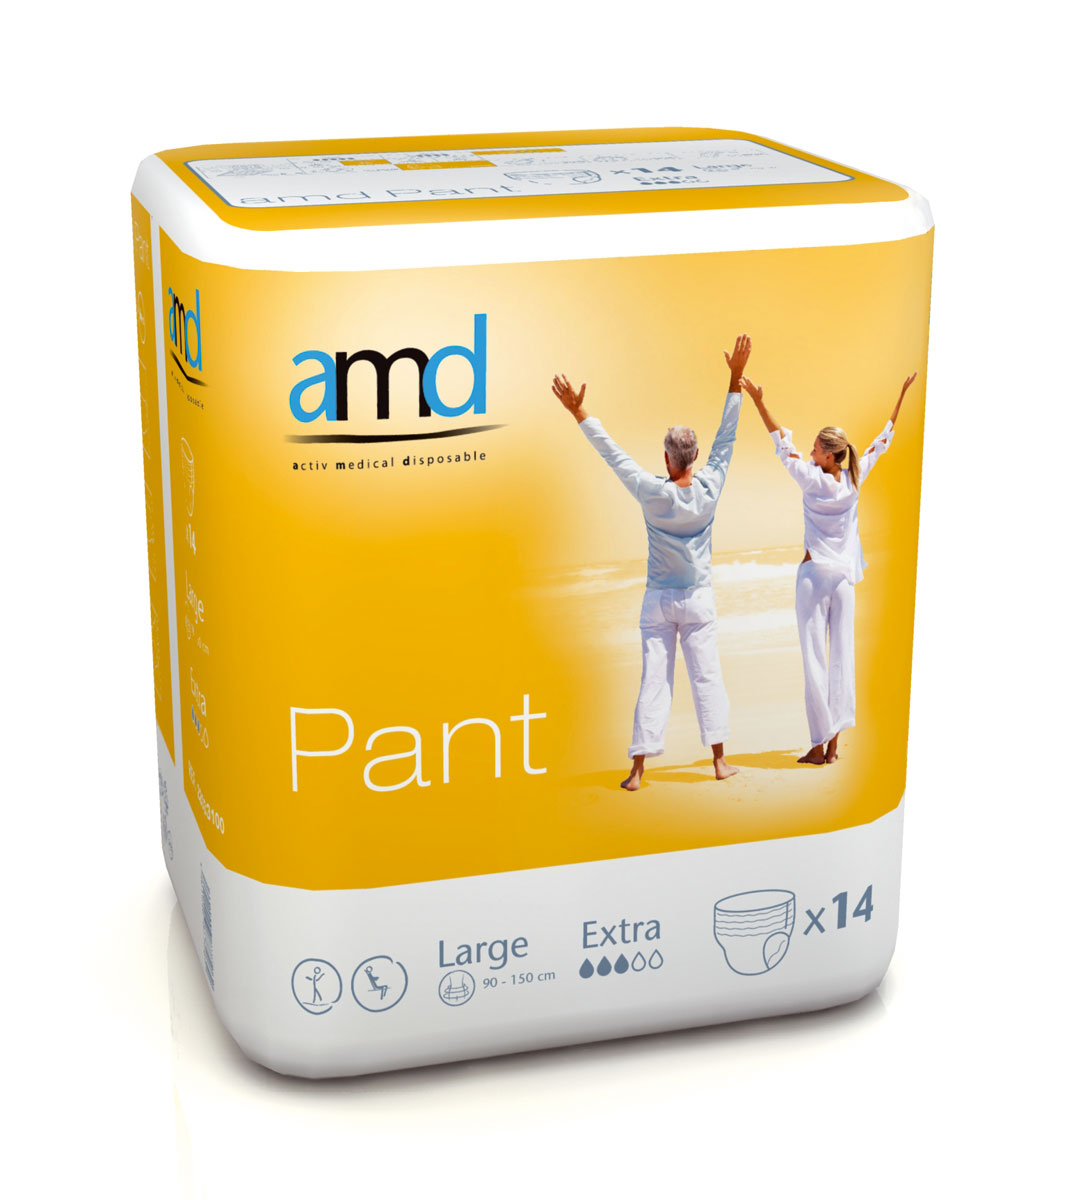 AMD Pant (EXTRA) - Inkontinenzpants - Gr. Large (L) - 14 Stück Beutel